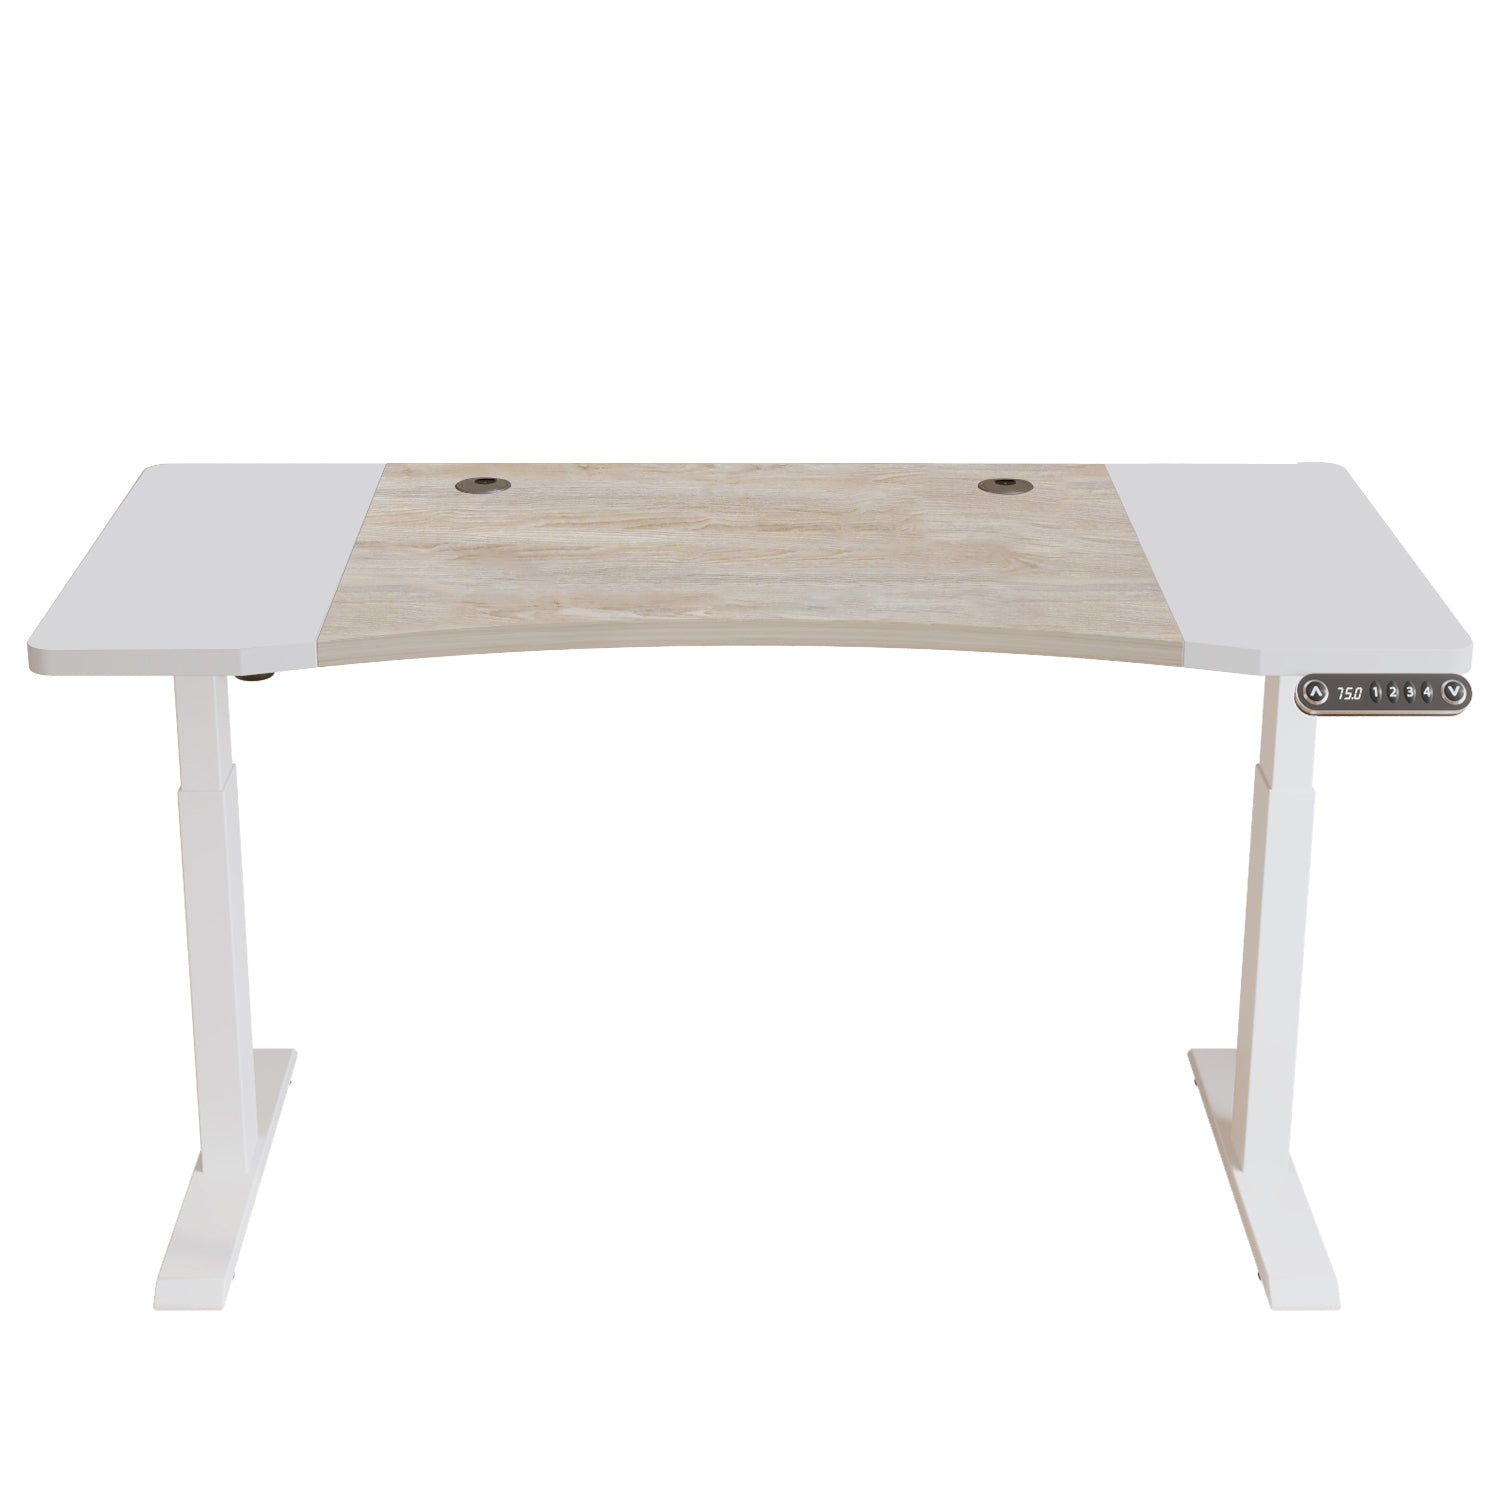 63" Adjustable White Standing Desk